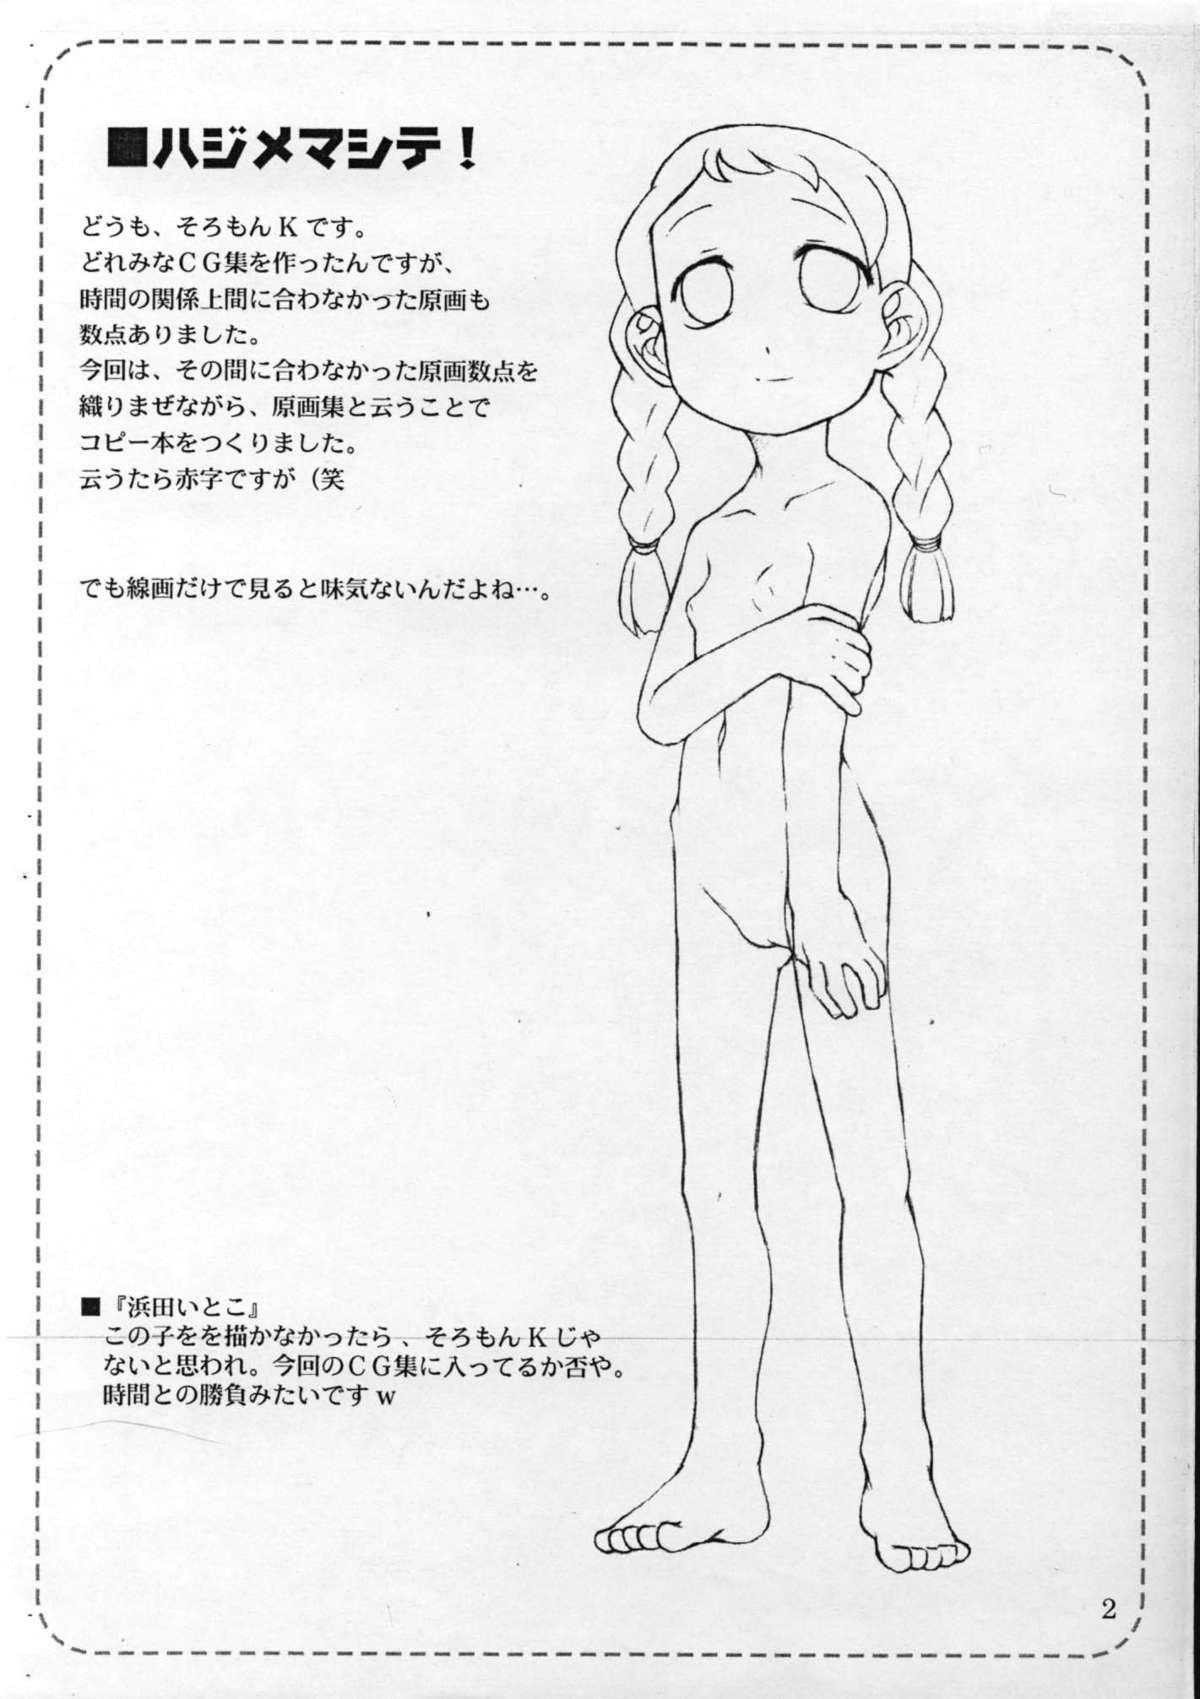 Skirt Wakippo 2 Gengashuu - Ojamajo doremi Peru - Page 2